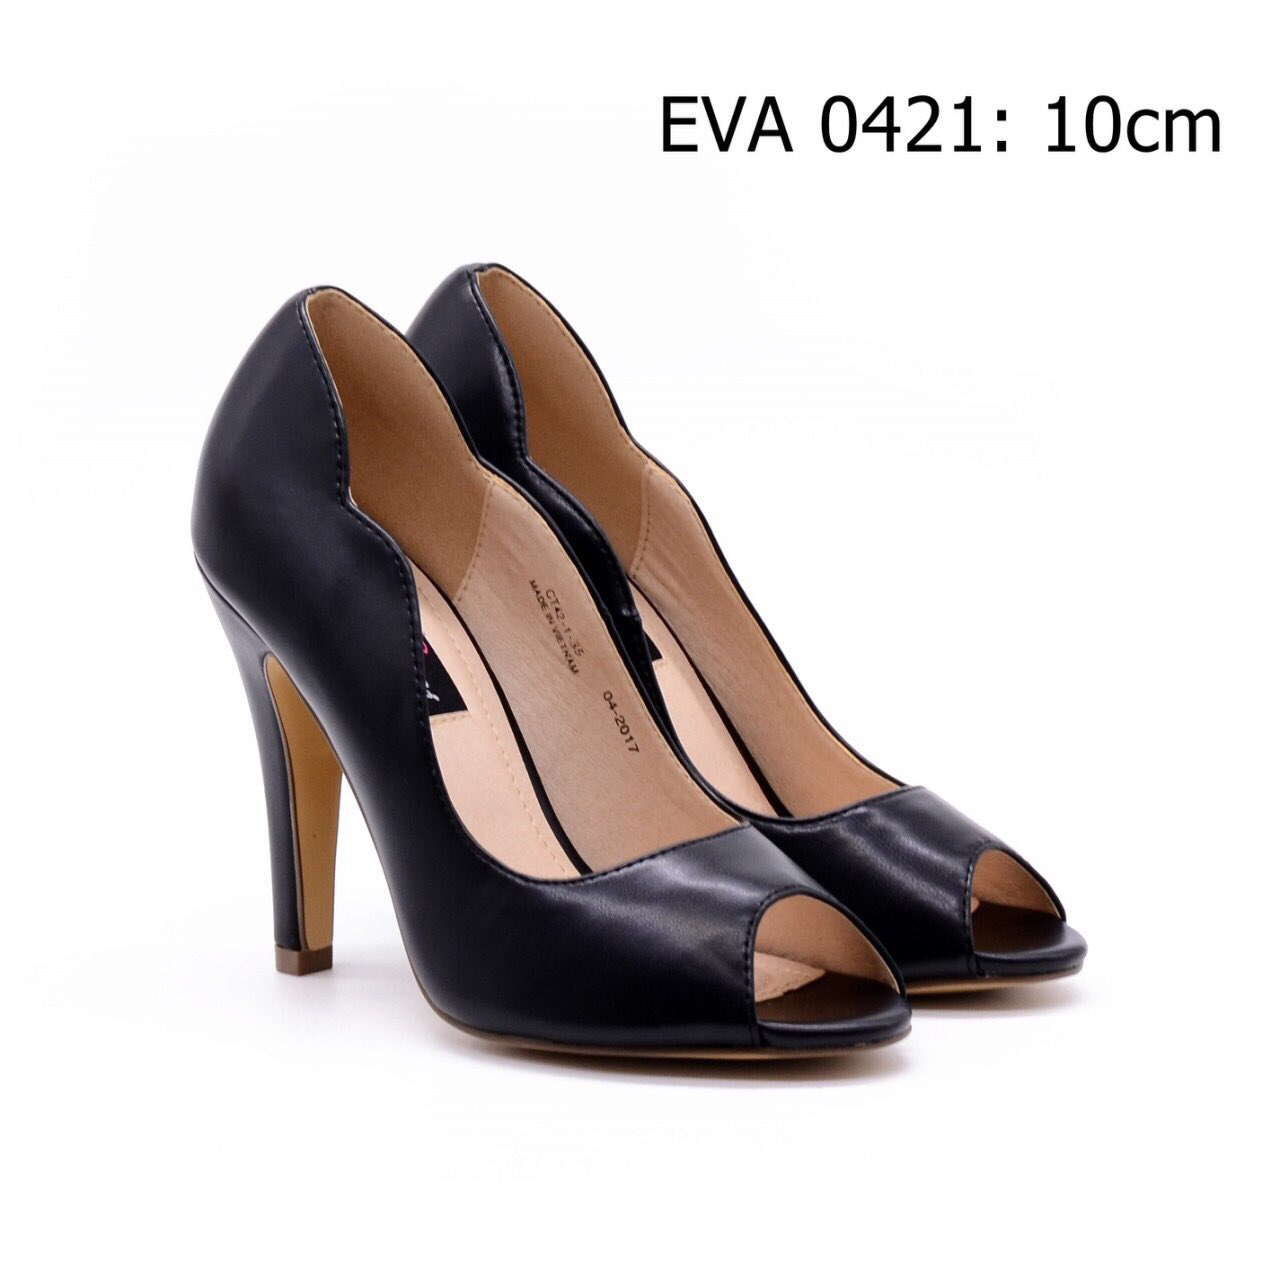 Giày cao gót hở mũi EVA0421 cao 10cm.